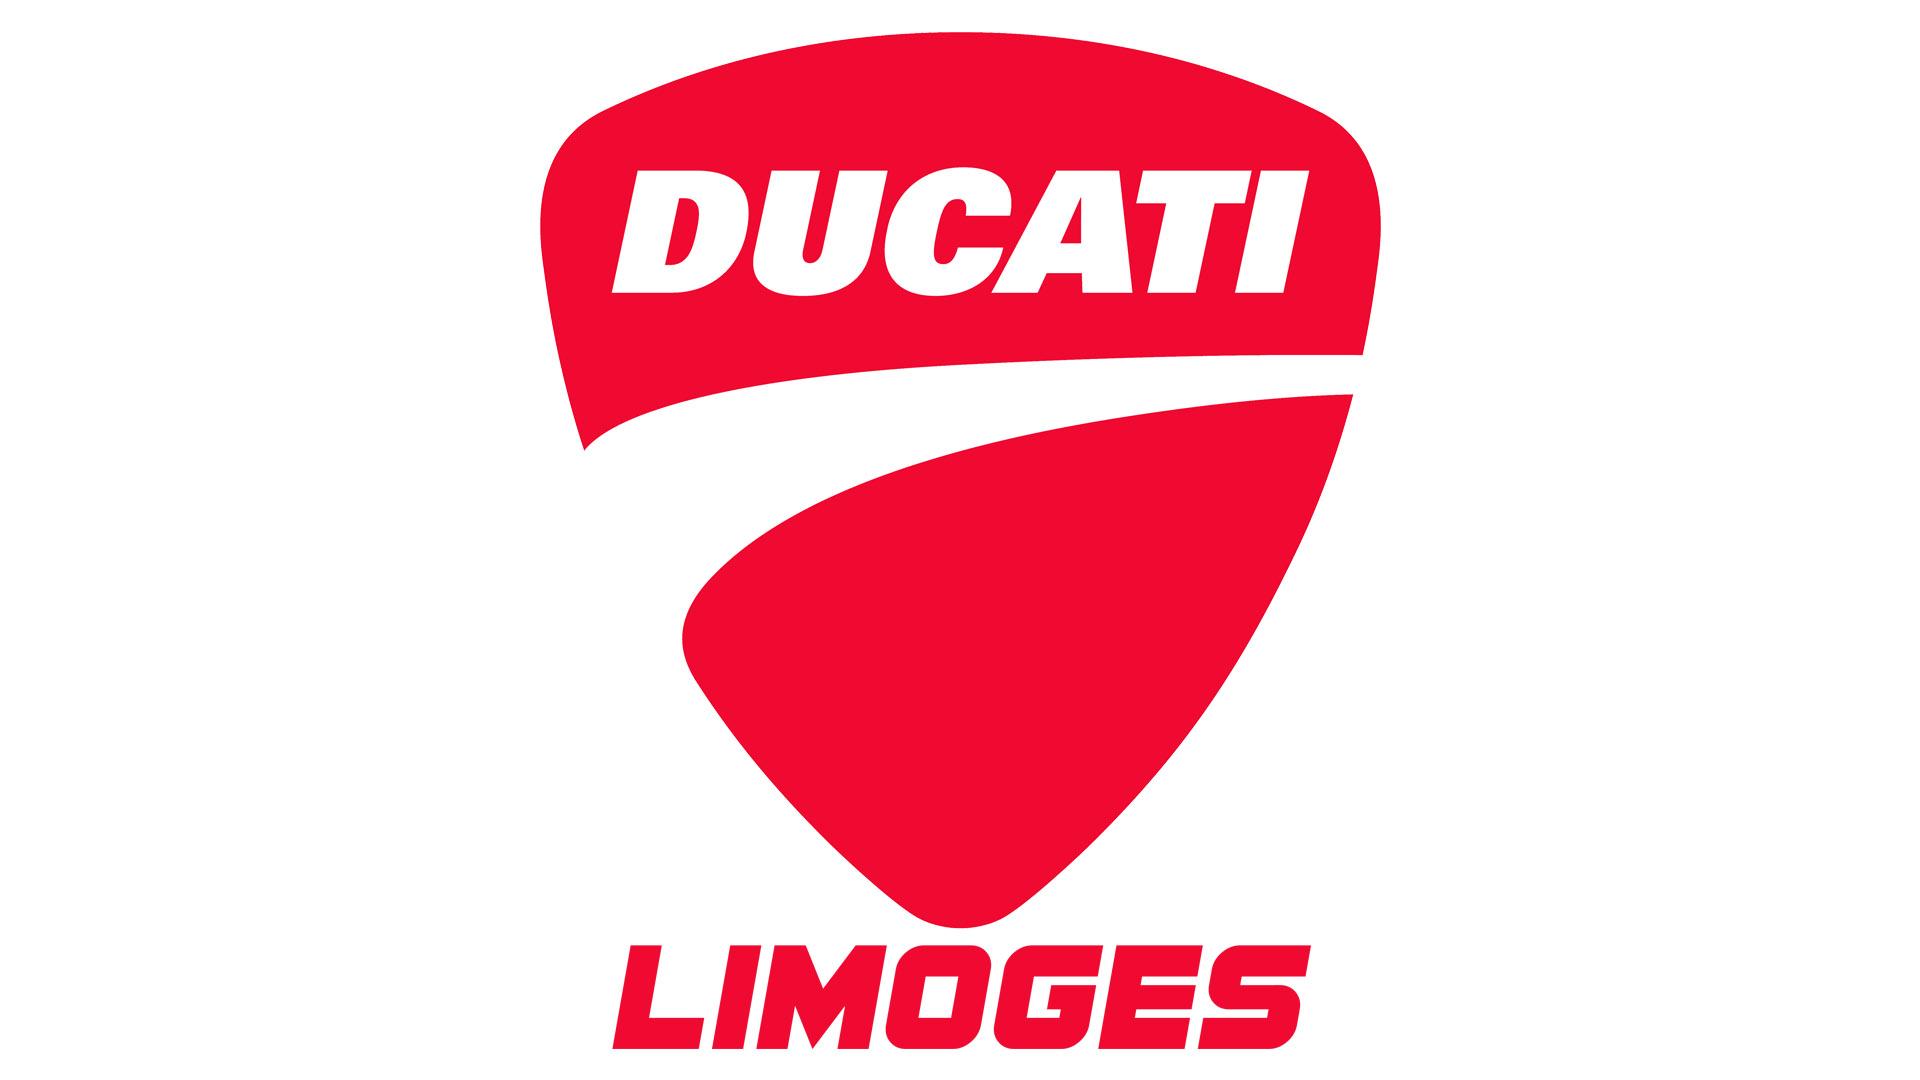 Ducati Limoges